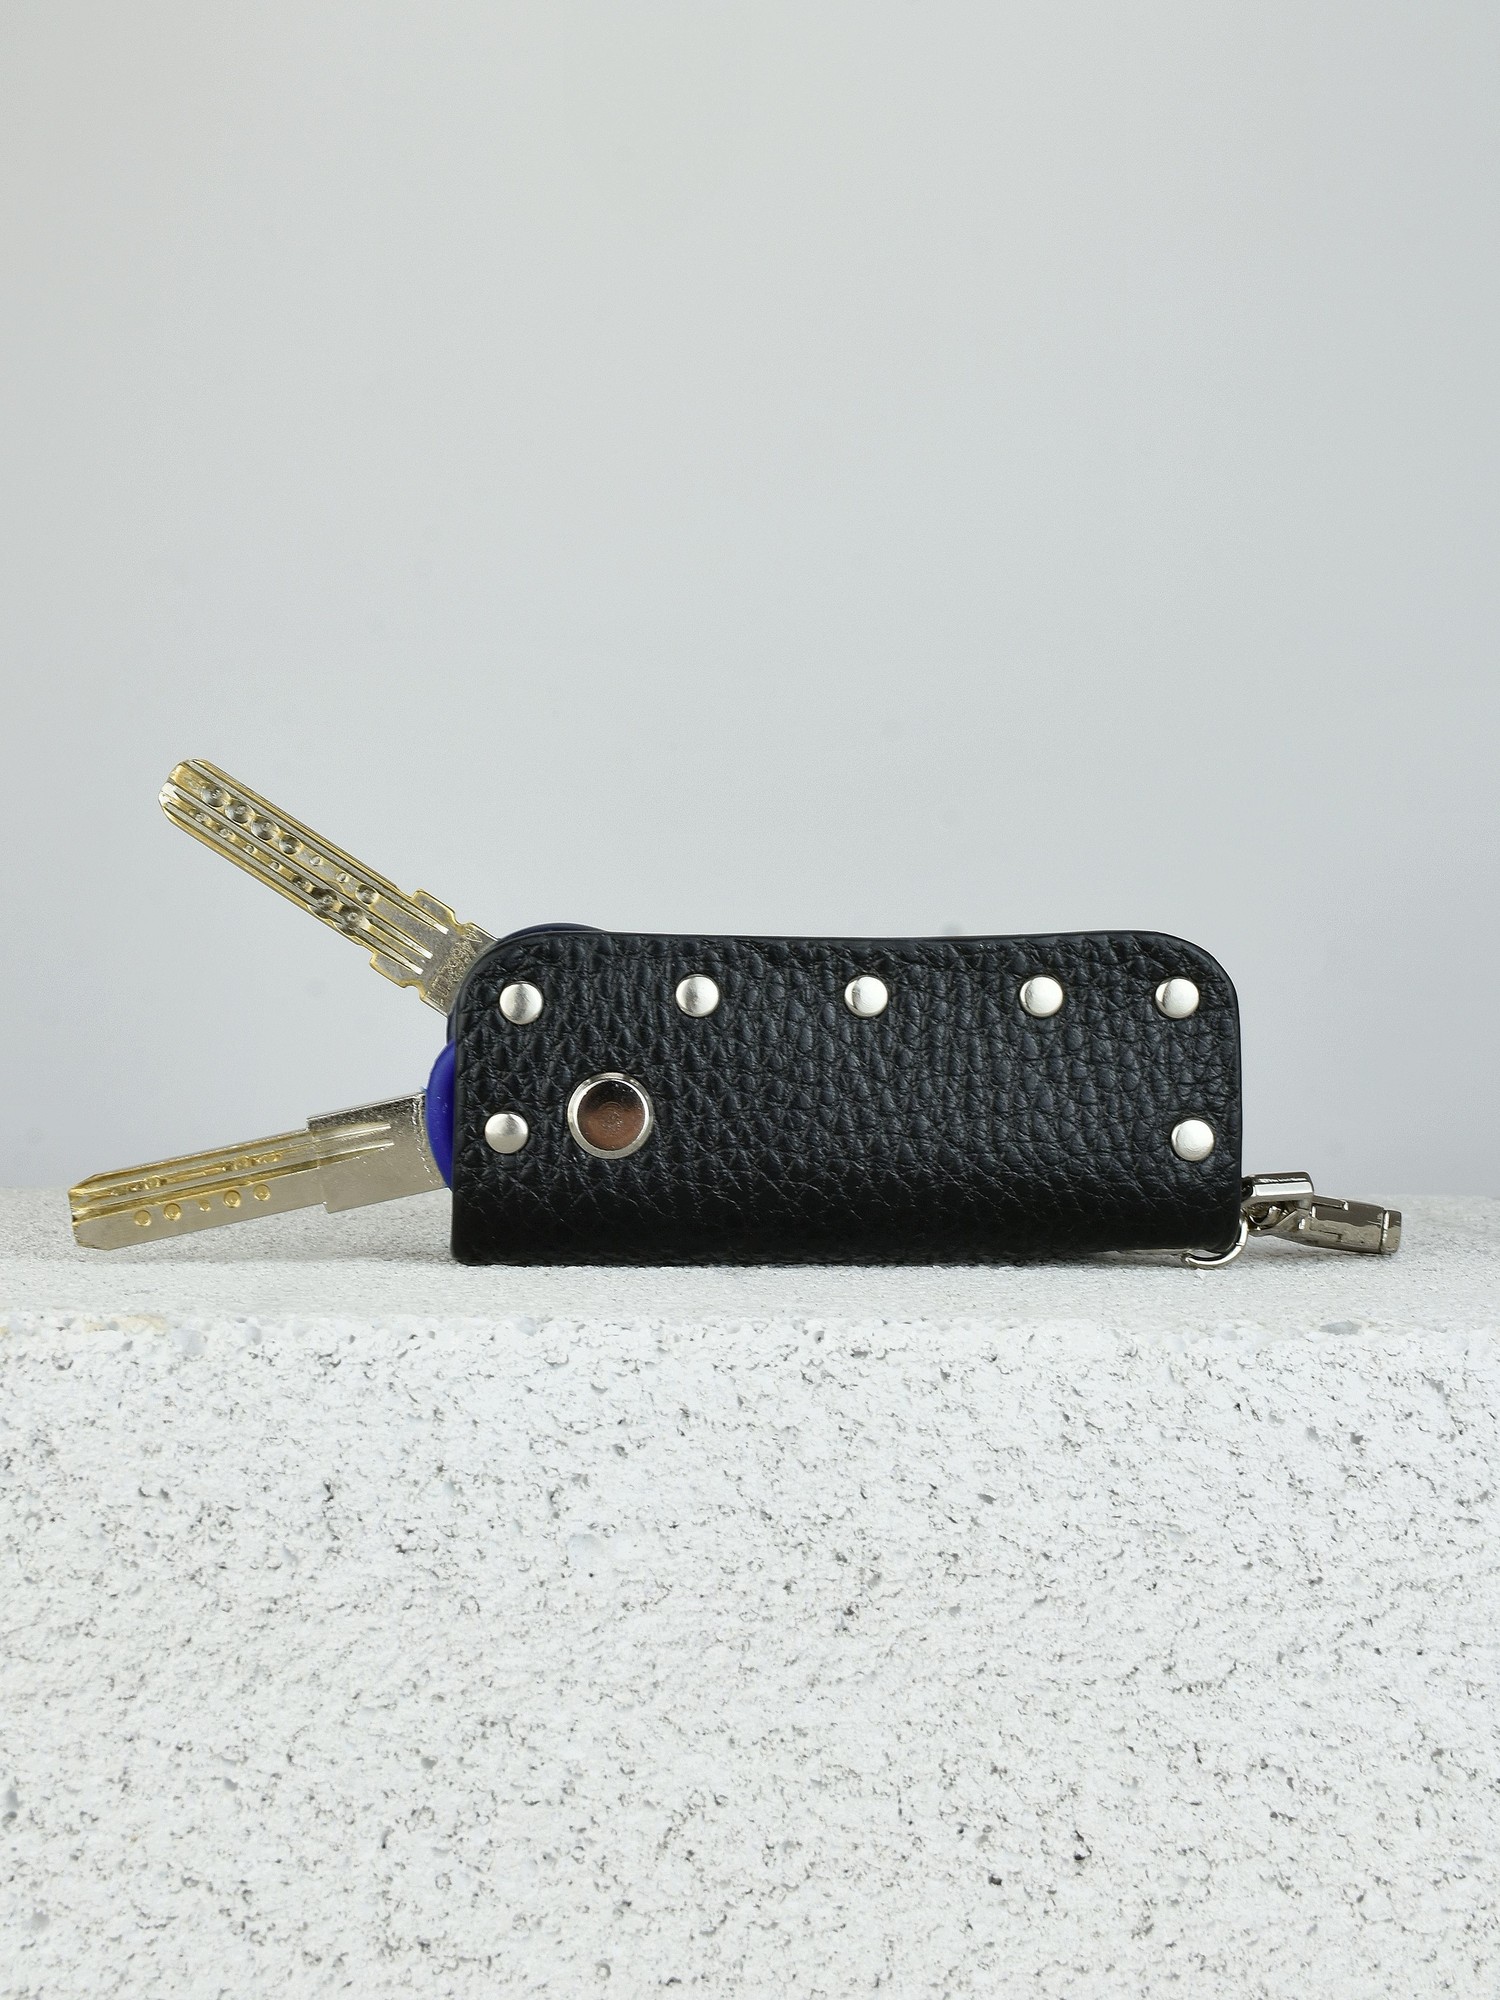 Personalized Leather Keychain, Key Holder Minimalist, Gift for